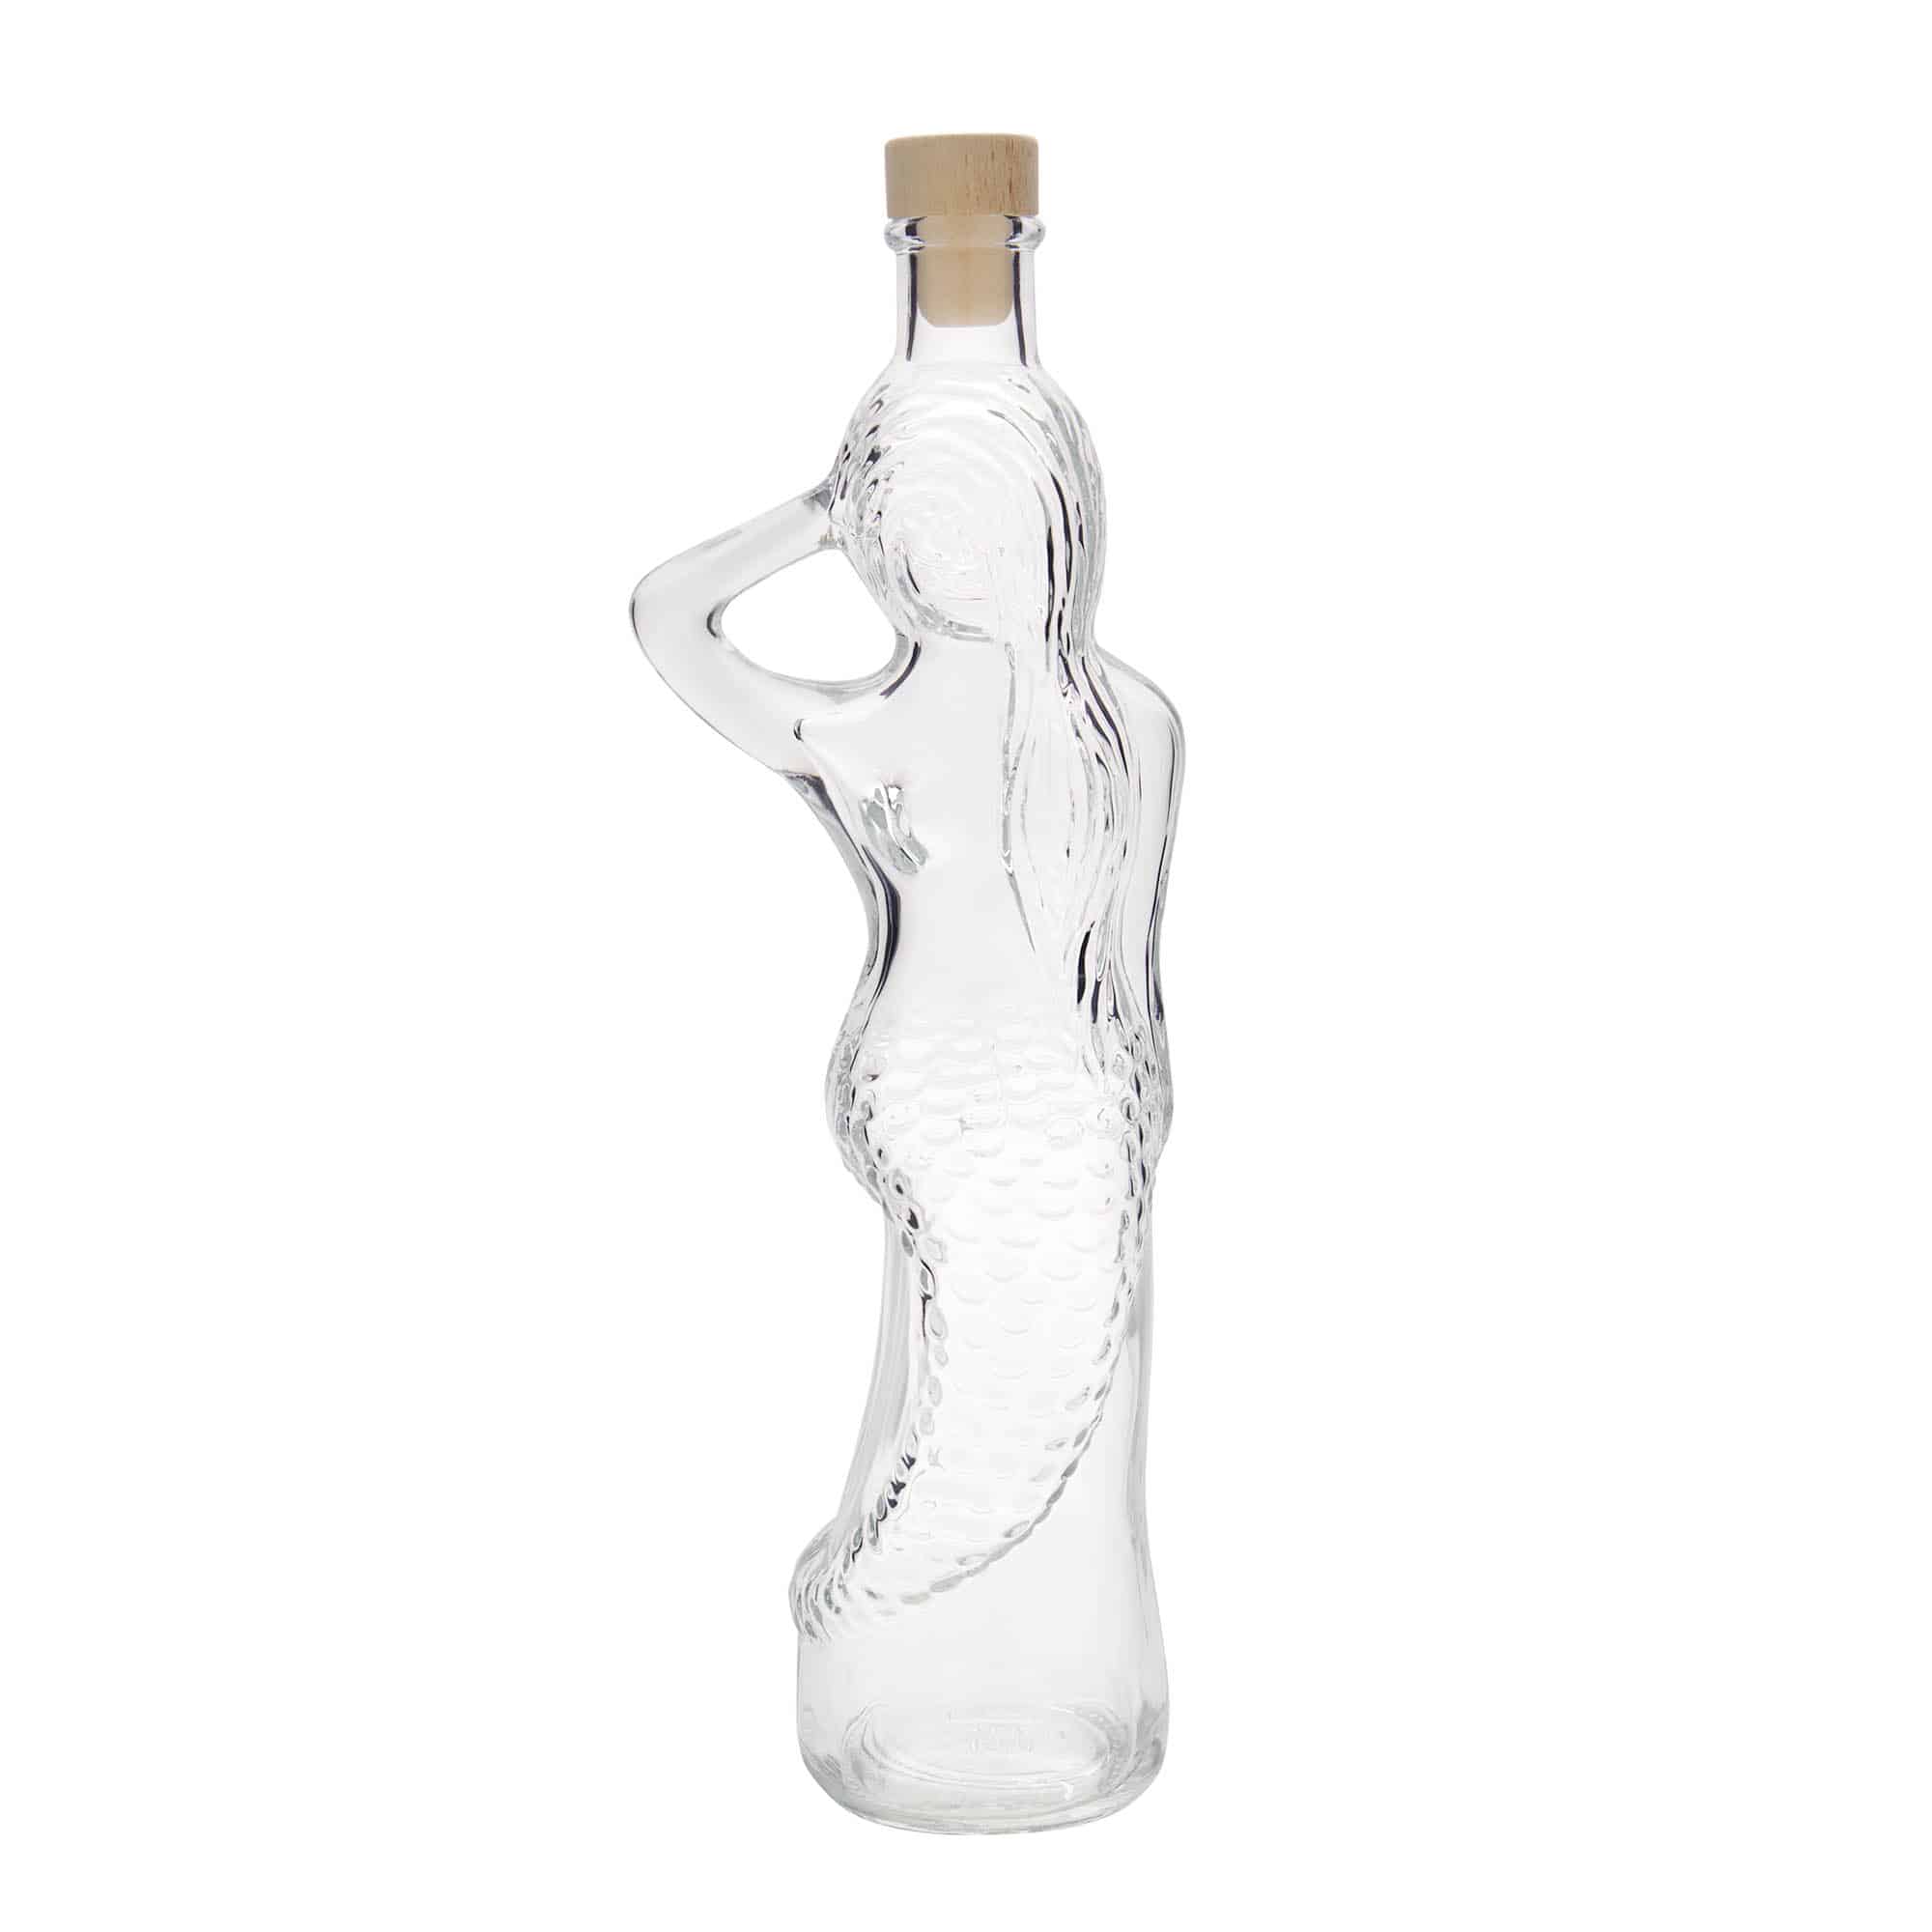 500 ml glass bottle 'Mermaid', closure: cork